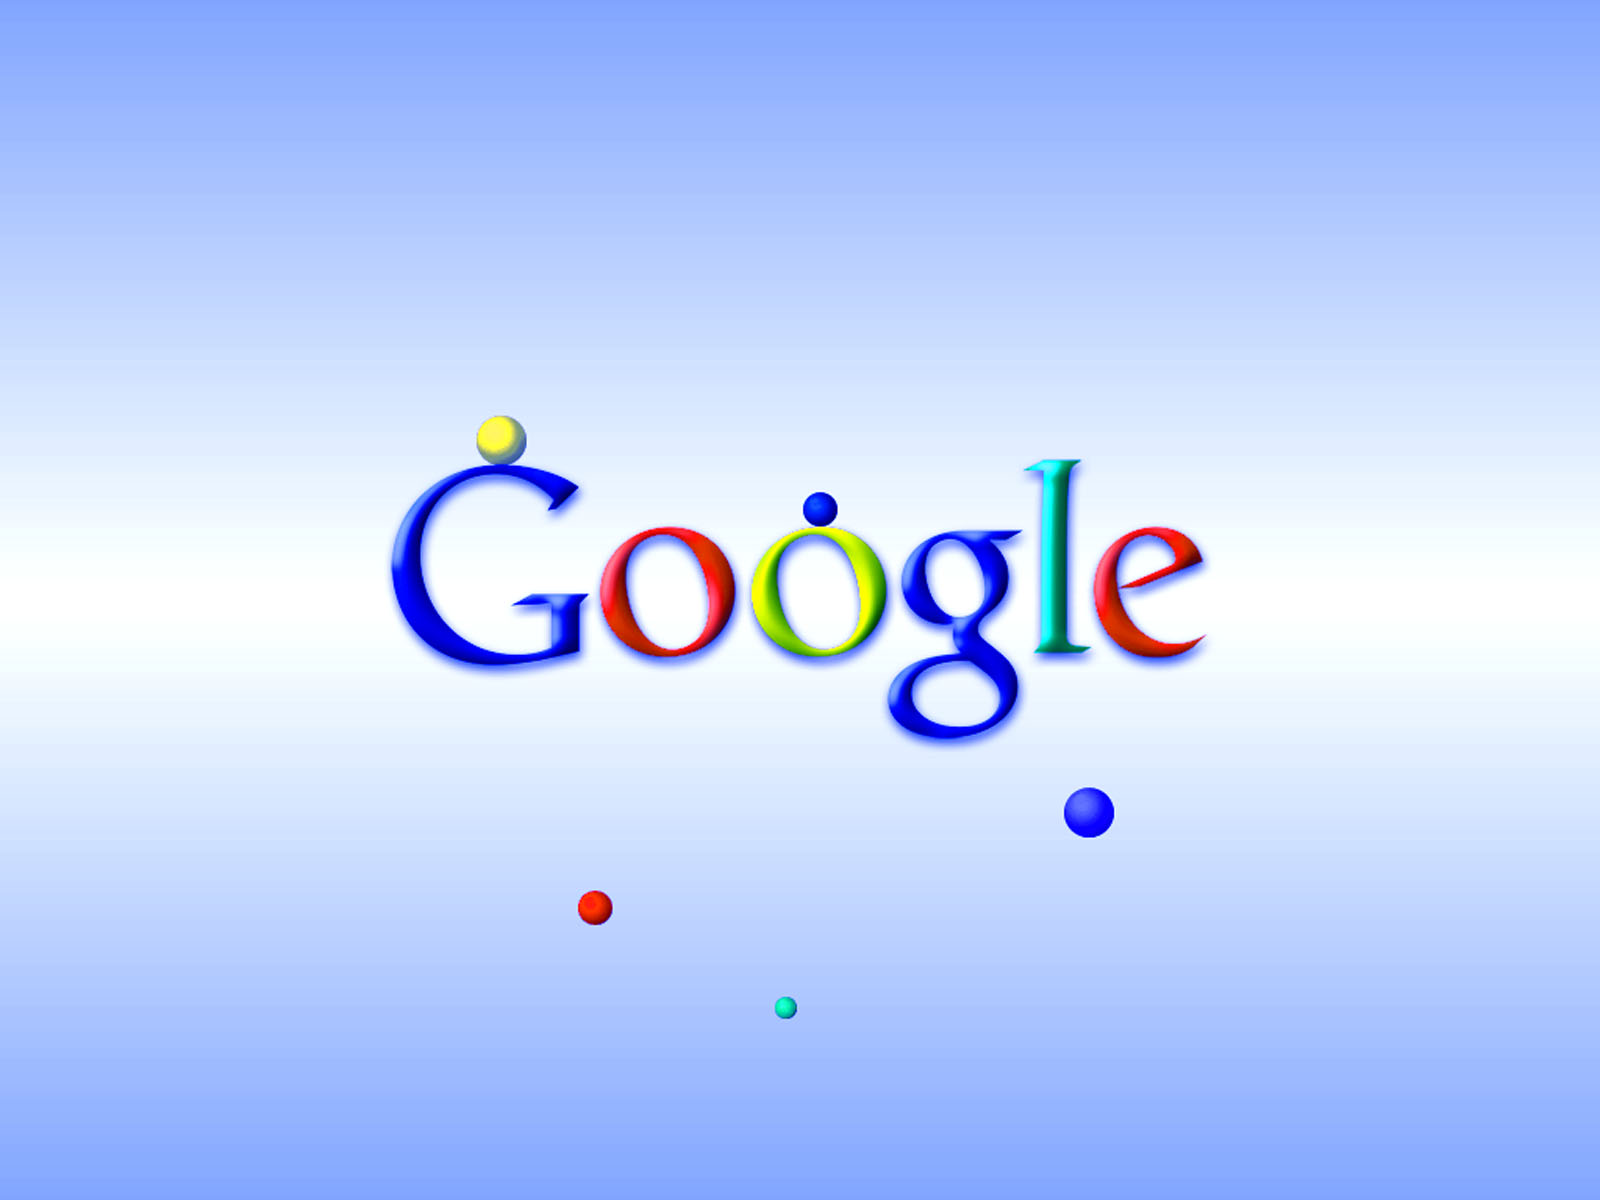 google wallpaper background,text,blue,font,daytime,sky